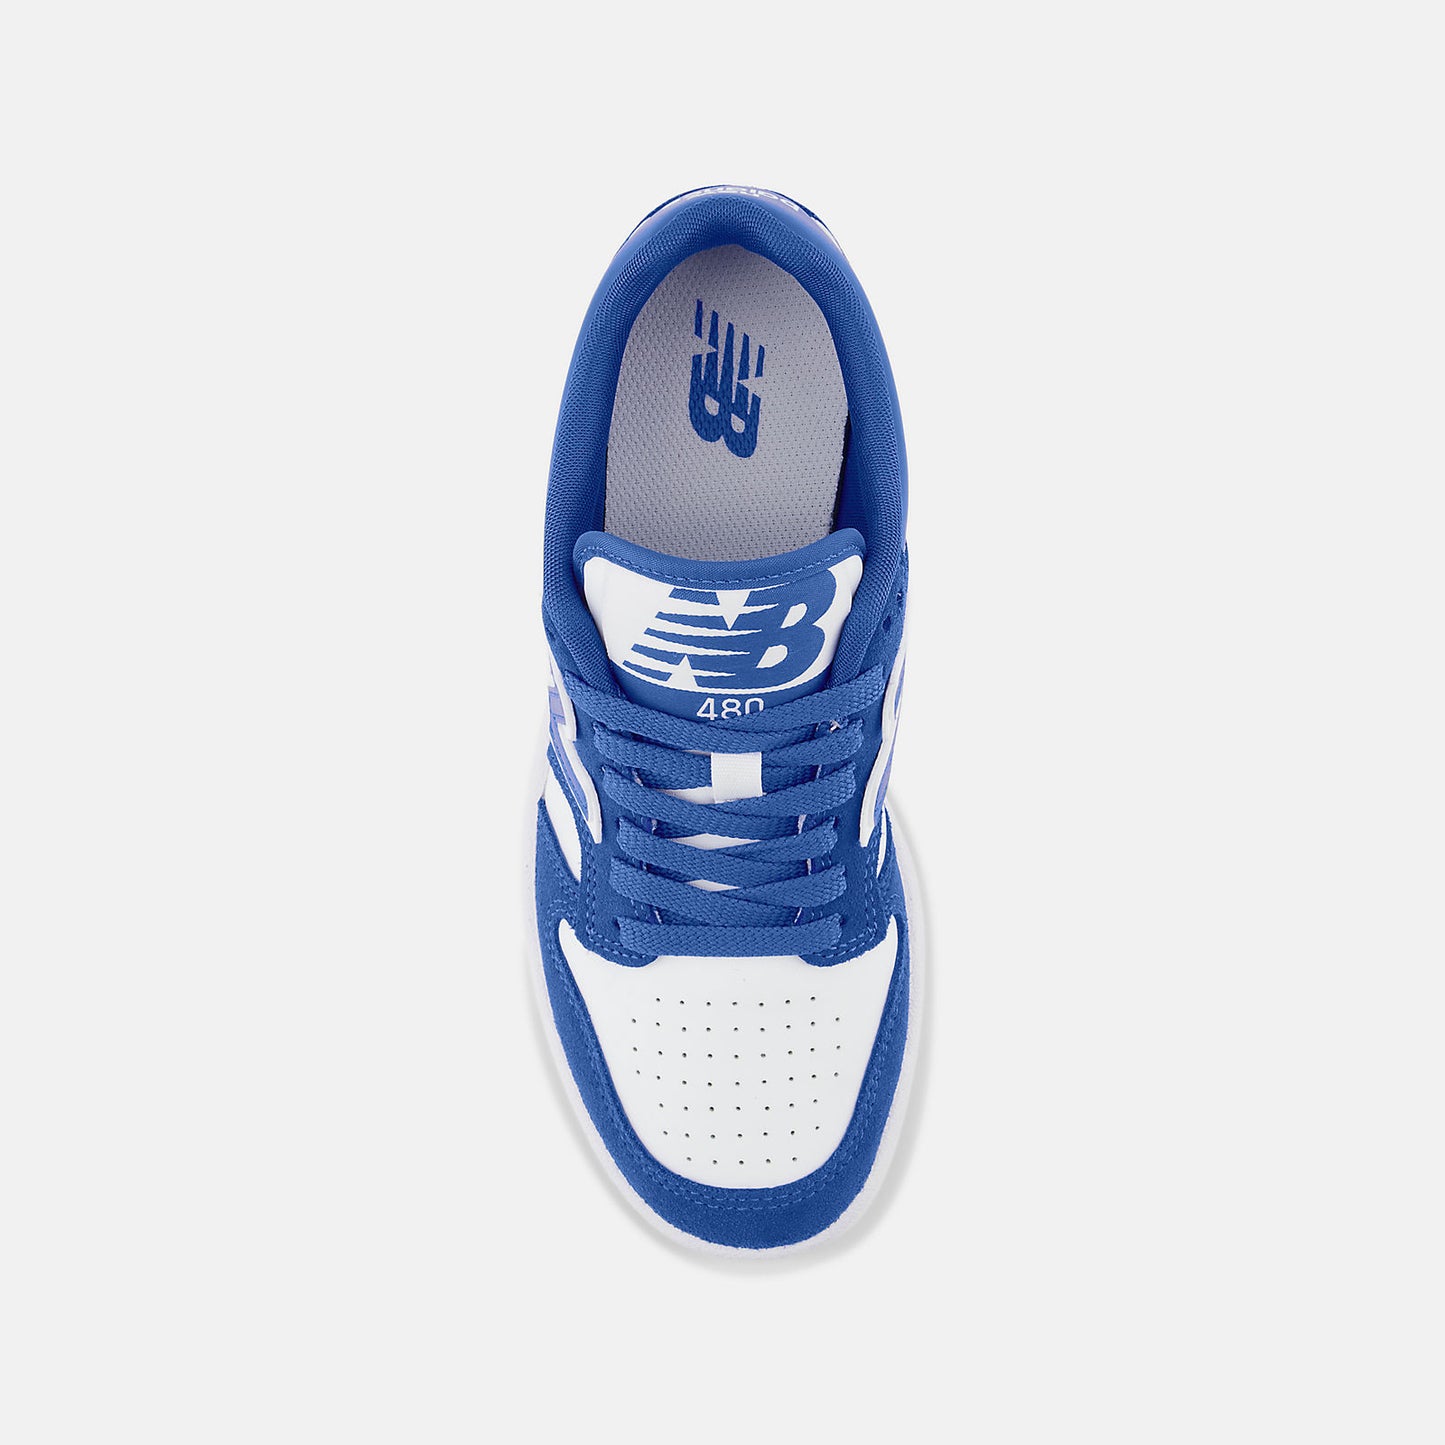 NEW BALANCE GSB 480 Blanc Bleu sneakers baskets